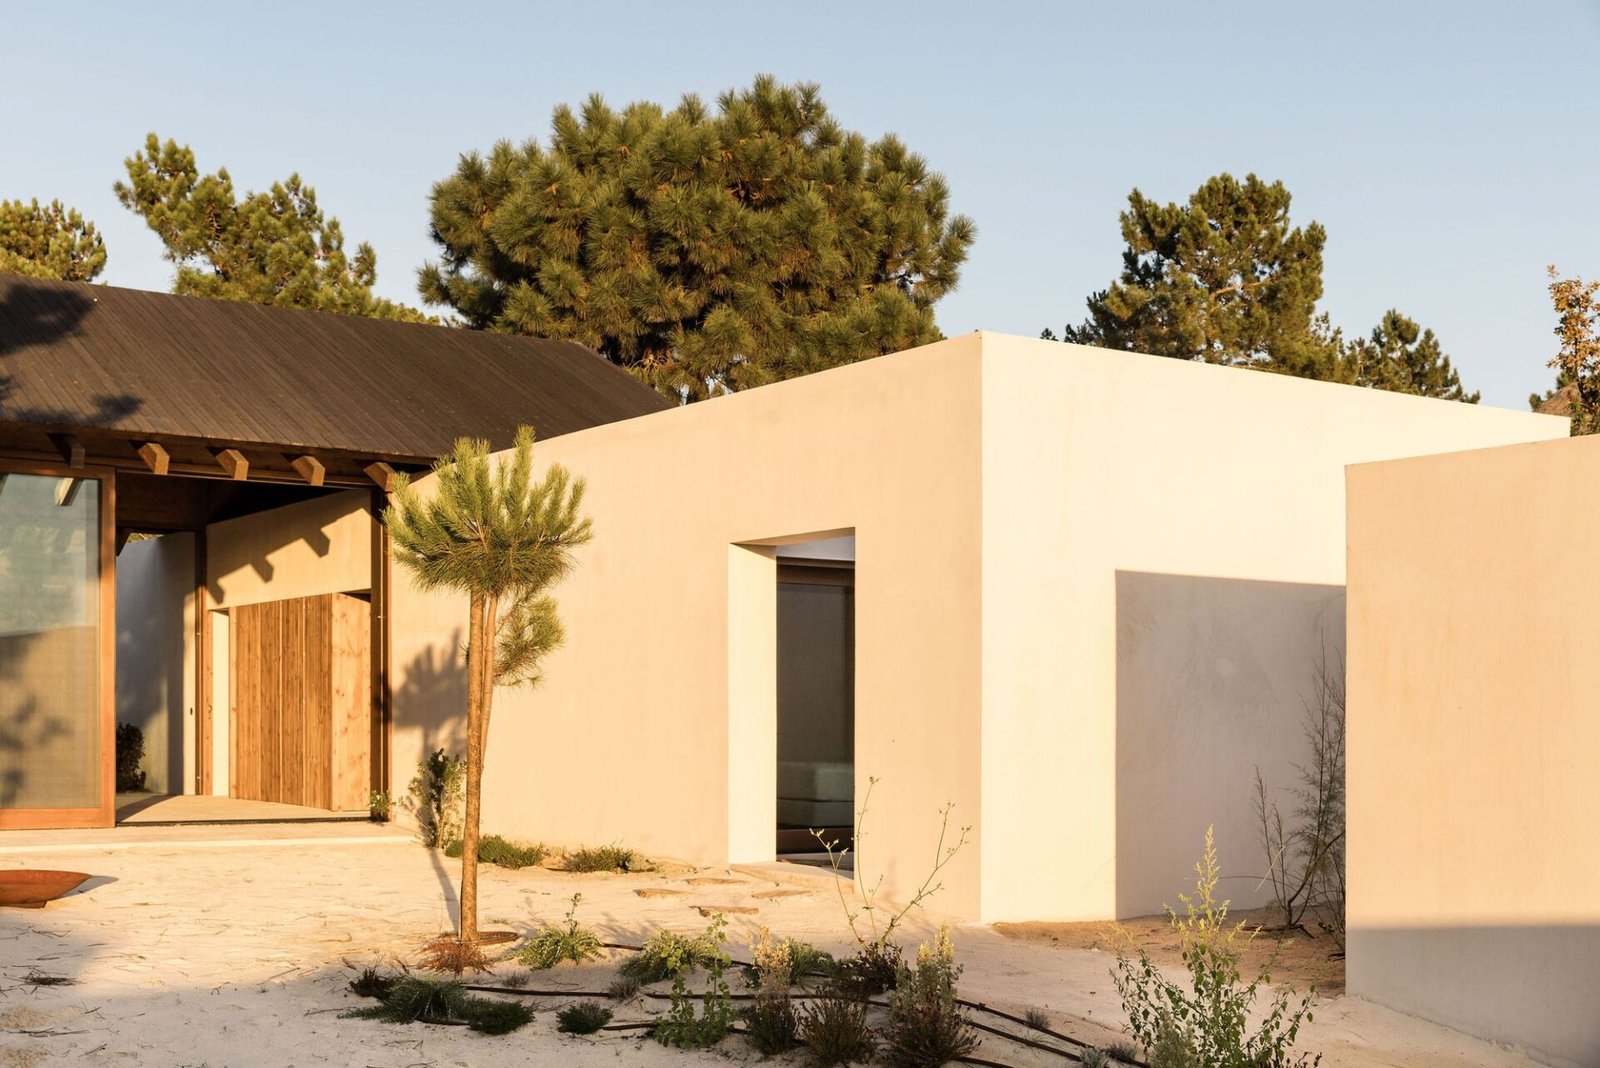 Casa en la ladera | SIA Arquitectura (Francisco Nogueira)